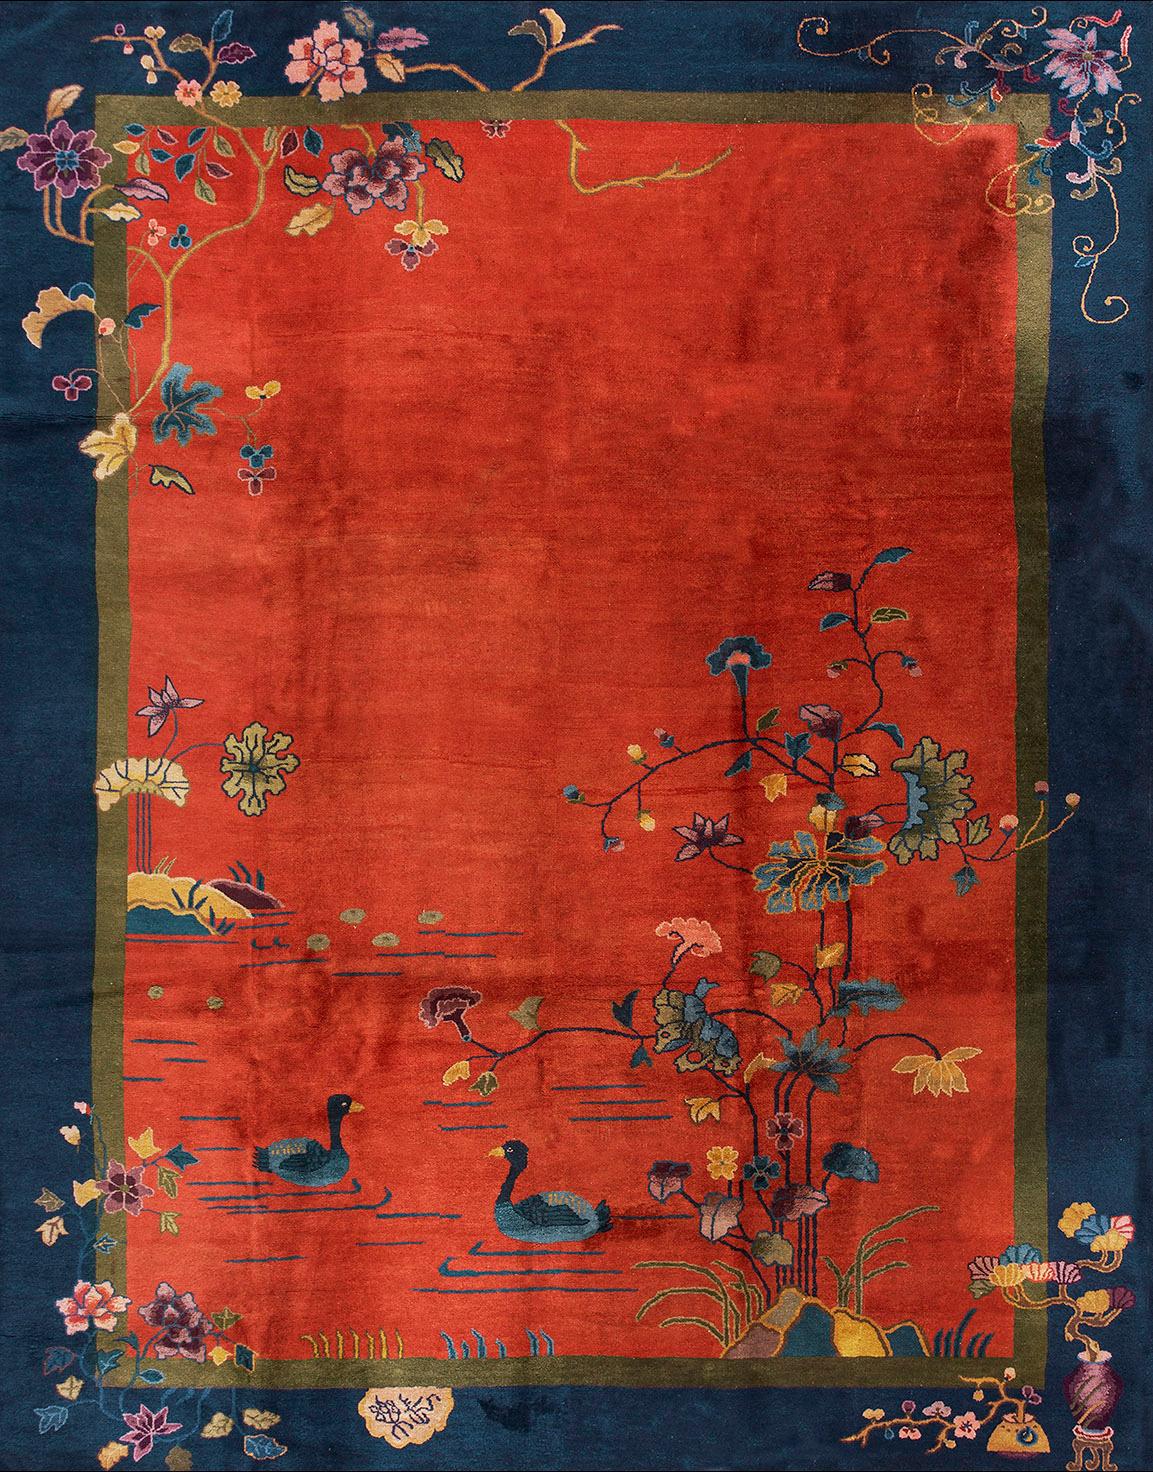 1920s Chinese Art Deco Carpet ( 9' x 11'10" - 275 x 360 cm )